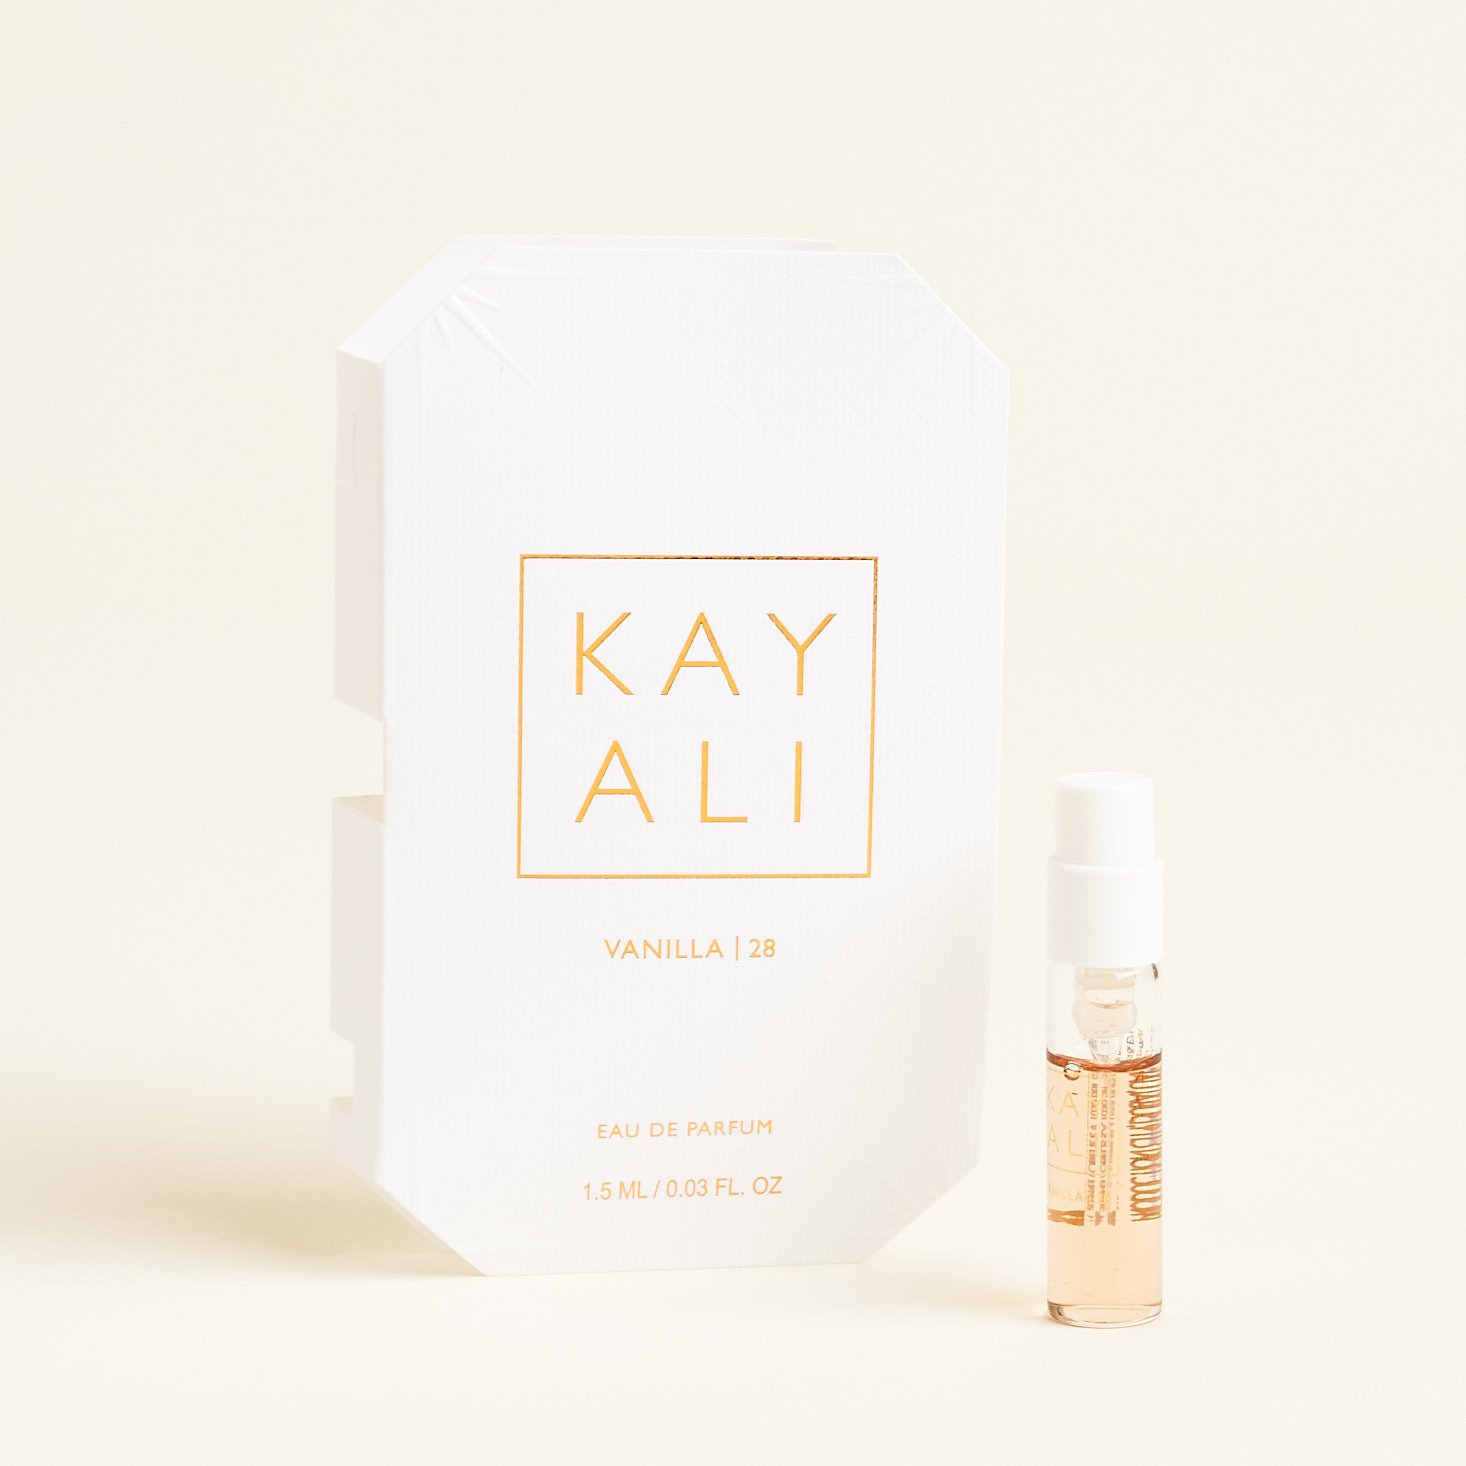 kayali perfume sample booklet